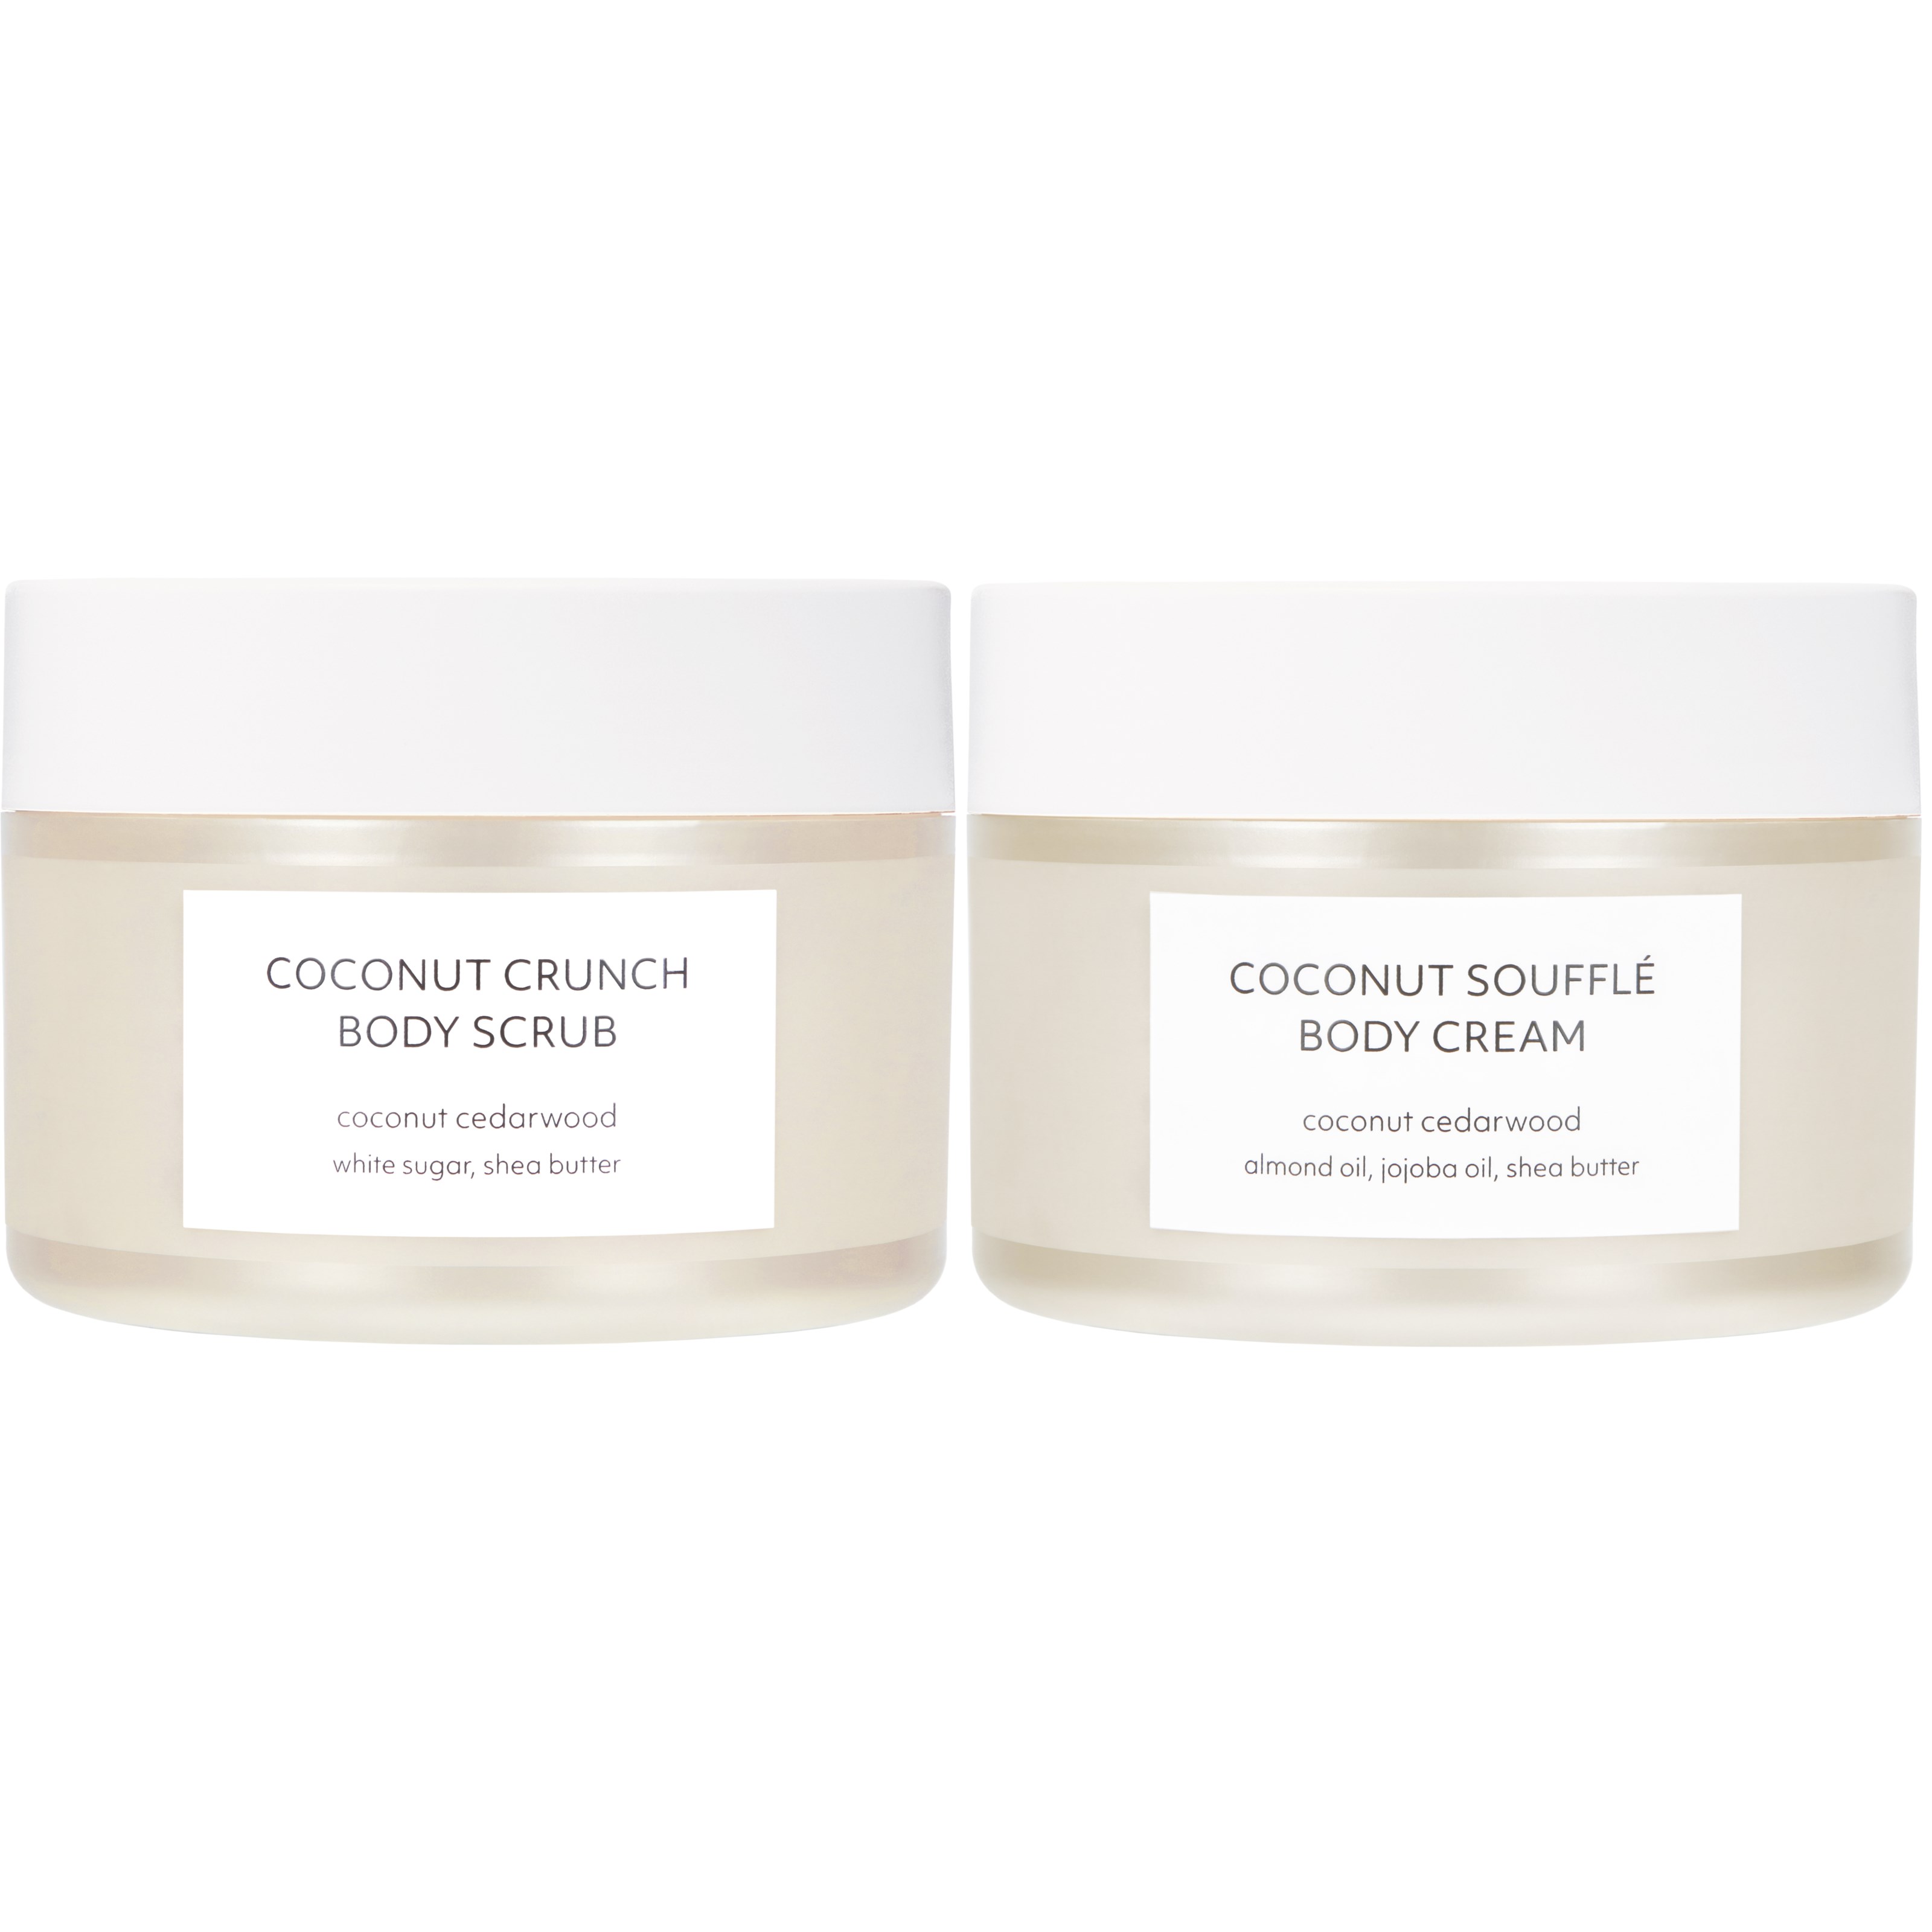 Bilde av Estelle&thild Organic Beauty Coconut Cedarwood Coconut Body Care Duo